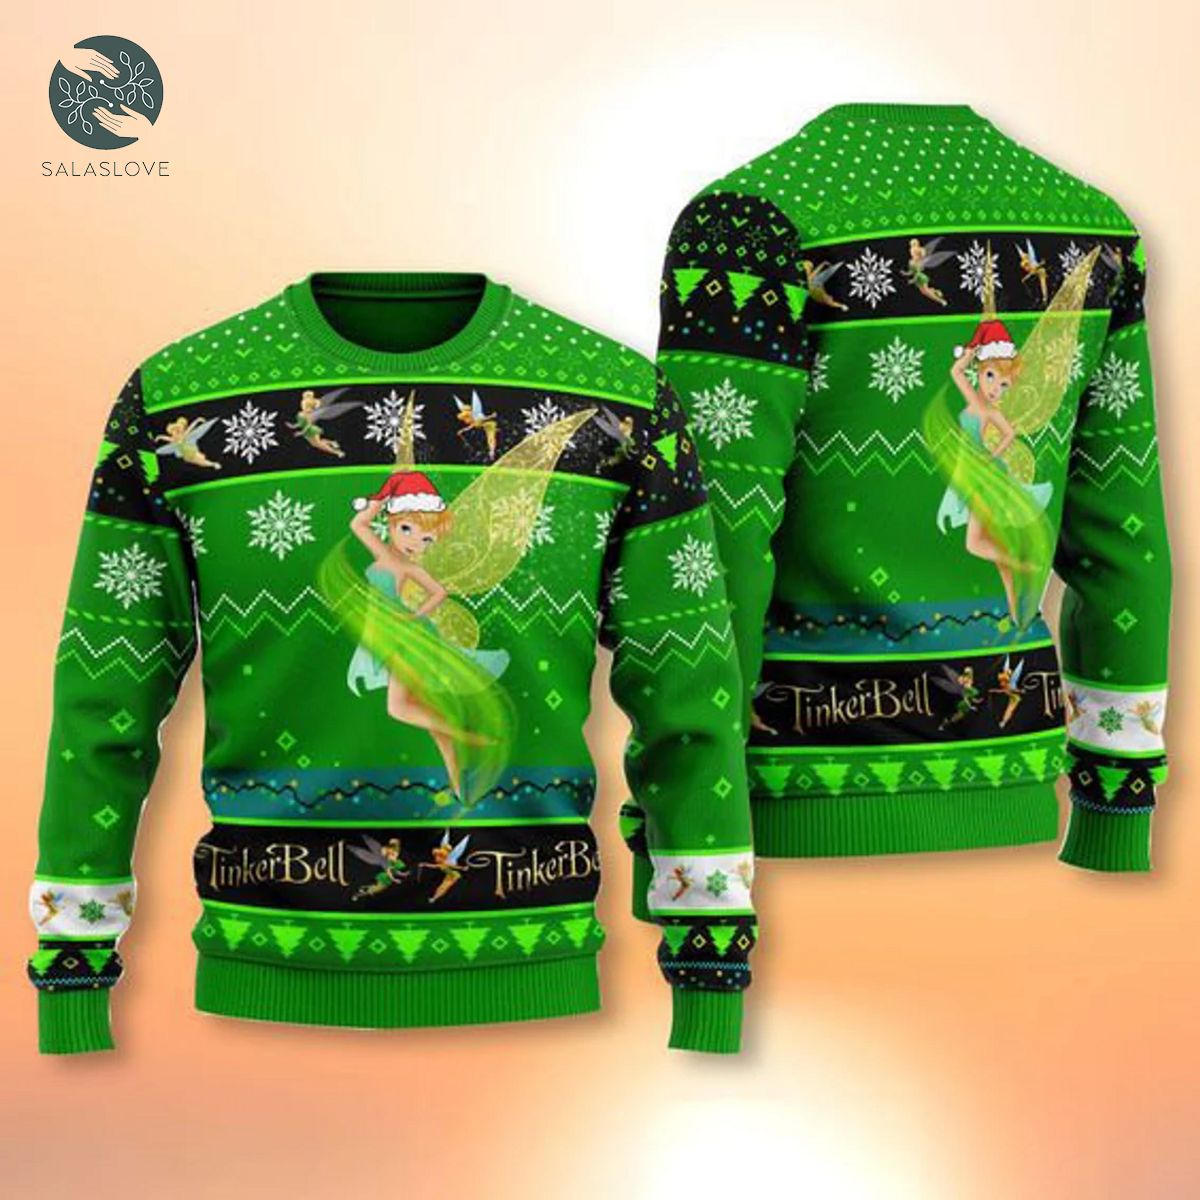 Disney Tinkerbell Christmas Sweater

